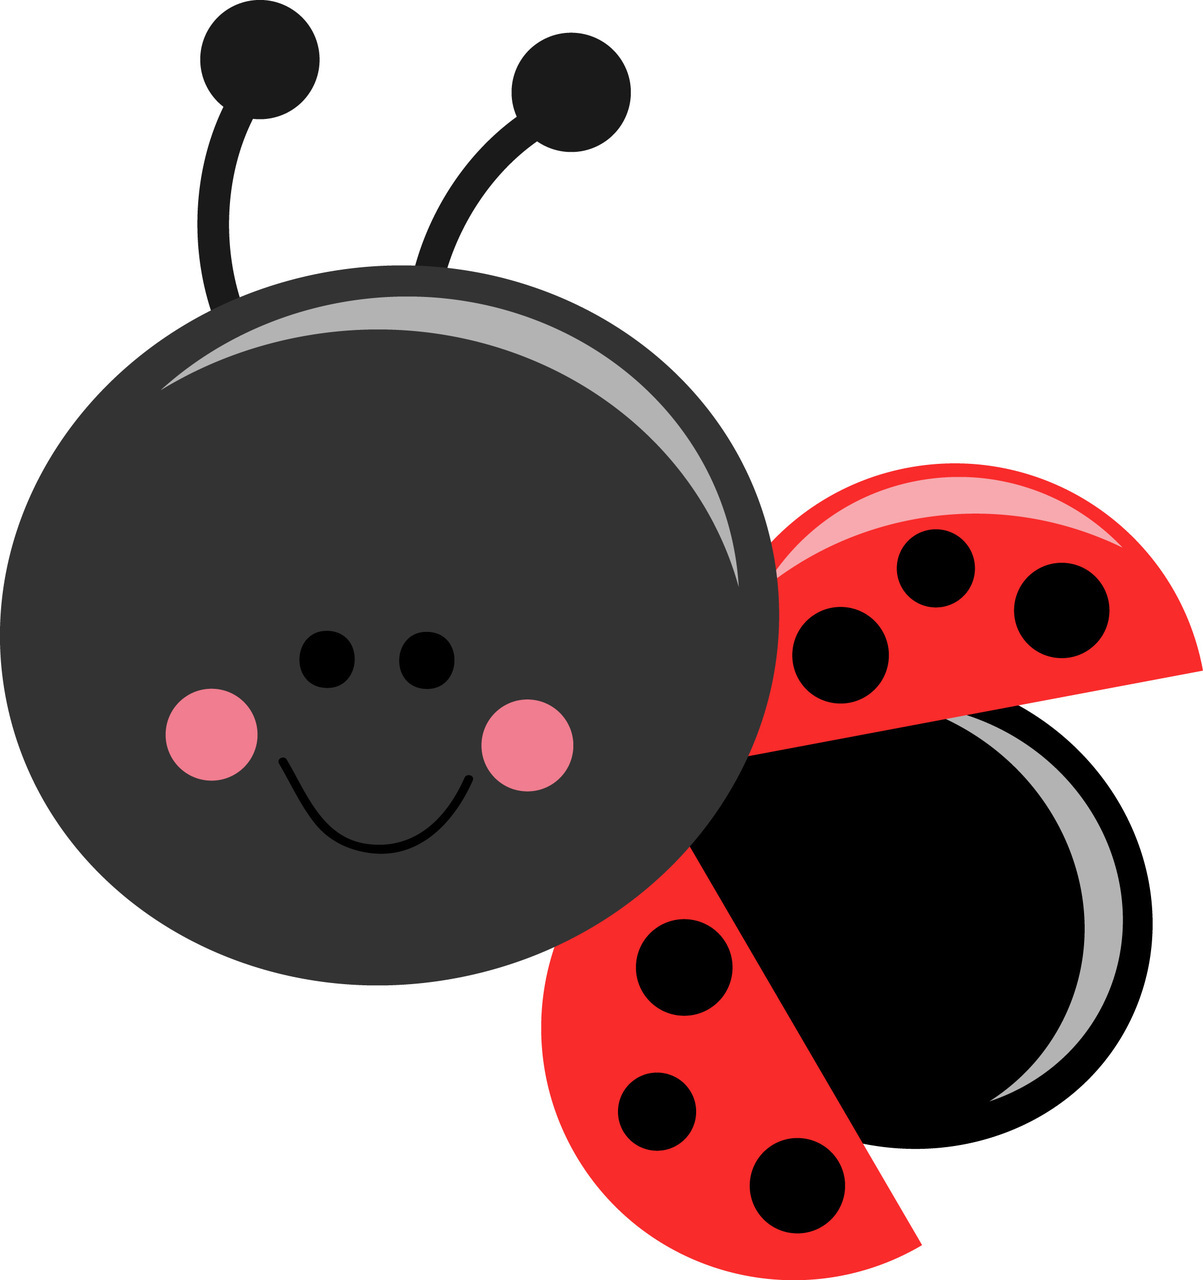 Cute Ladybug Images - ClipArt Best